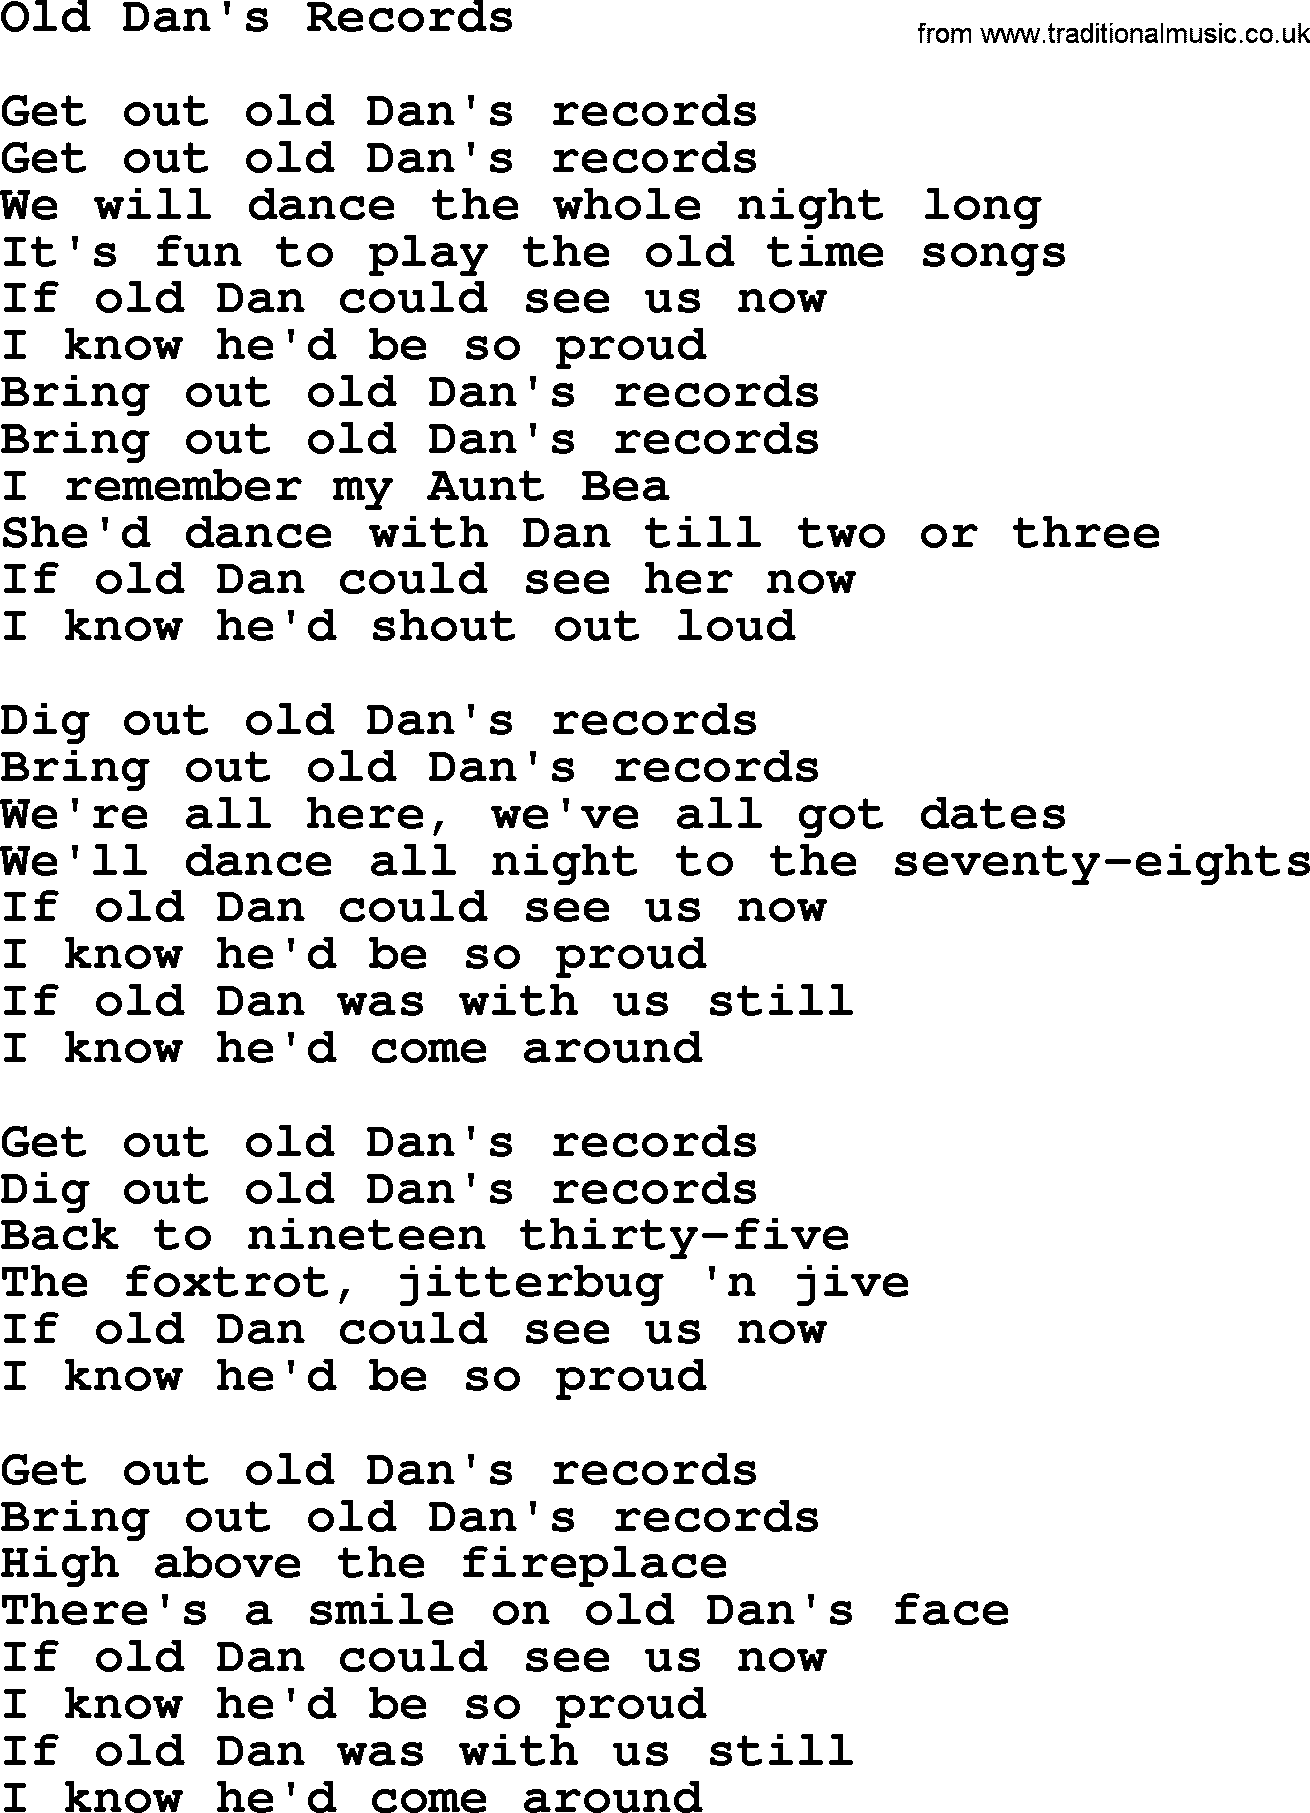 Gordon Lightfoot song Old Dan's Records, lyrics